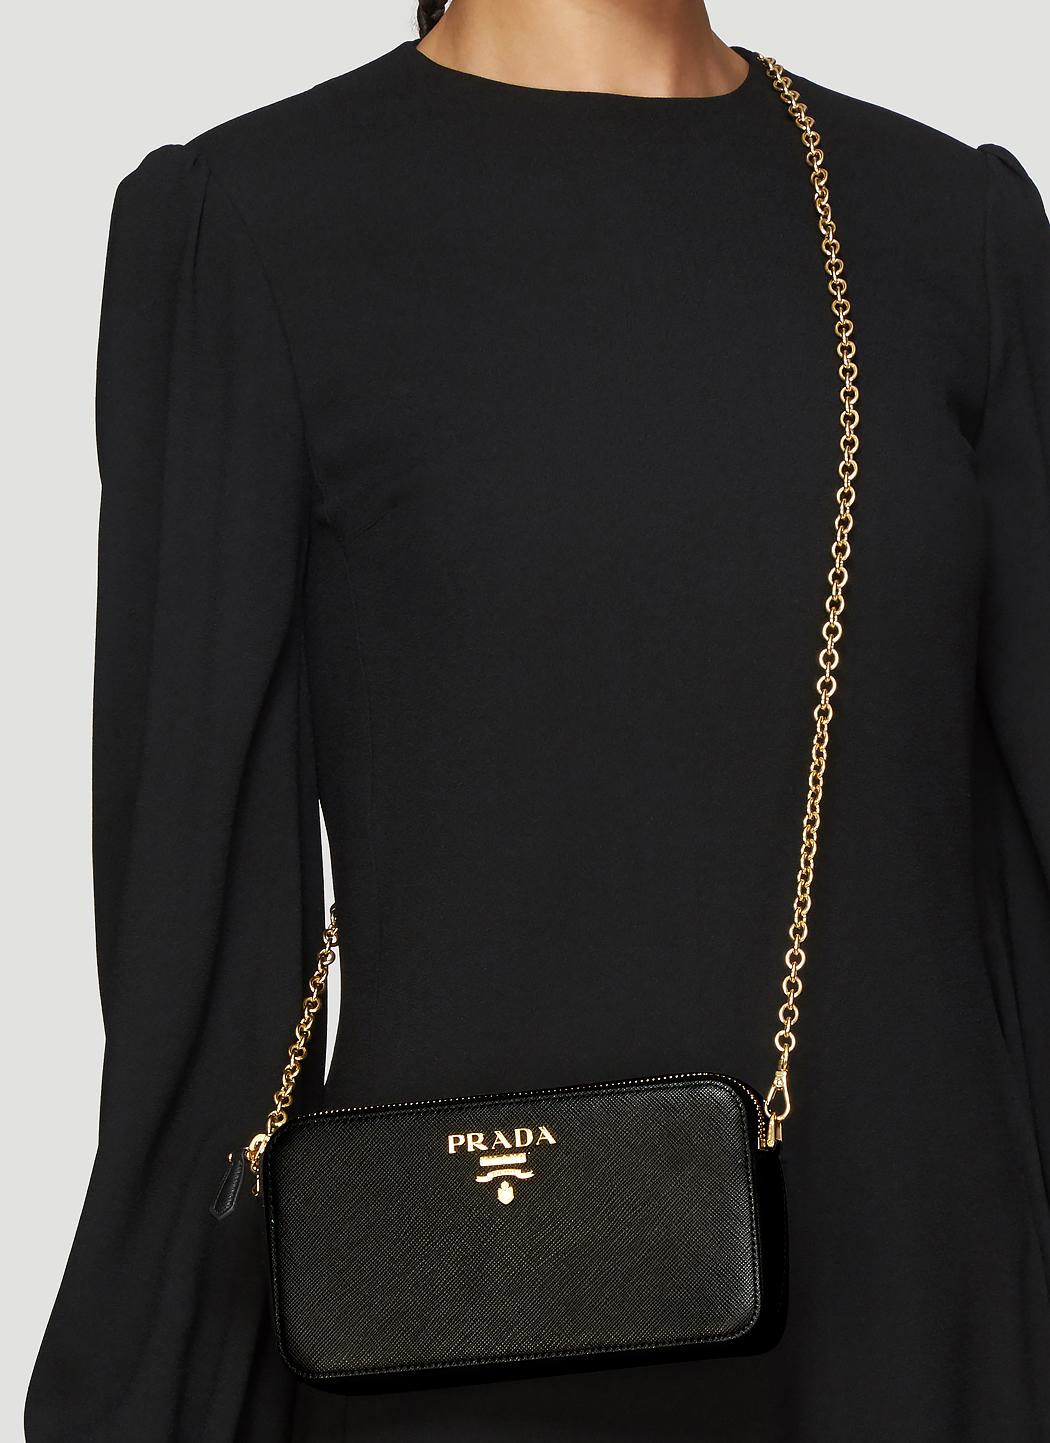 Prada Saffiano Leather Mini Shoulder Bag in Black - Lyst